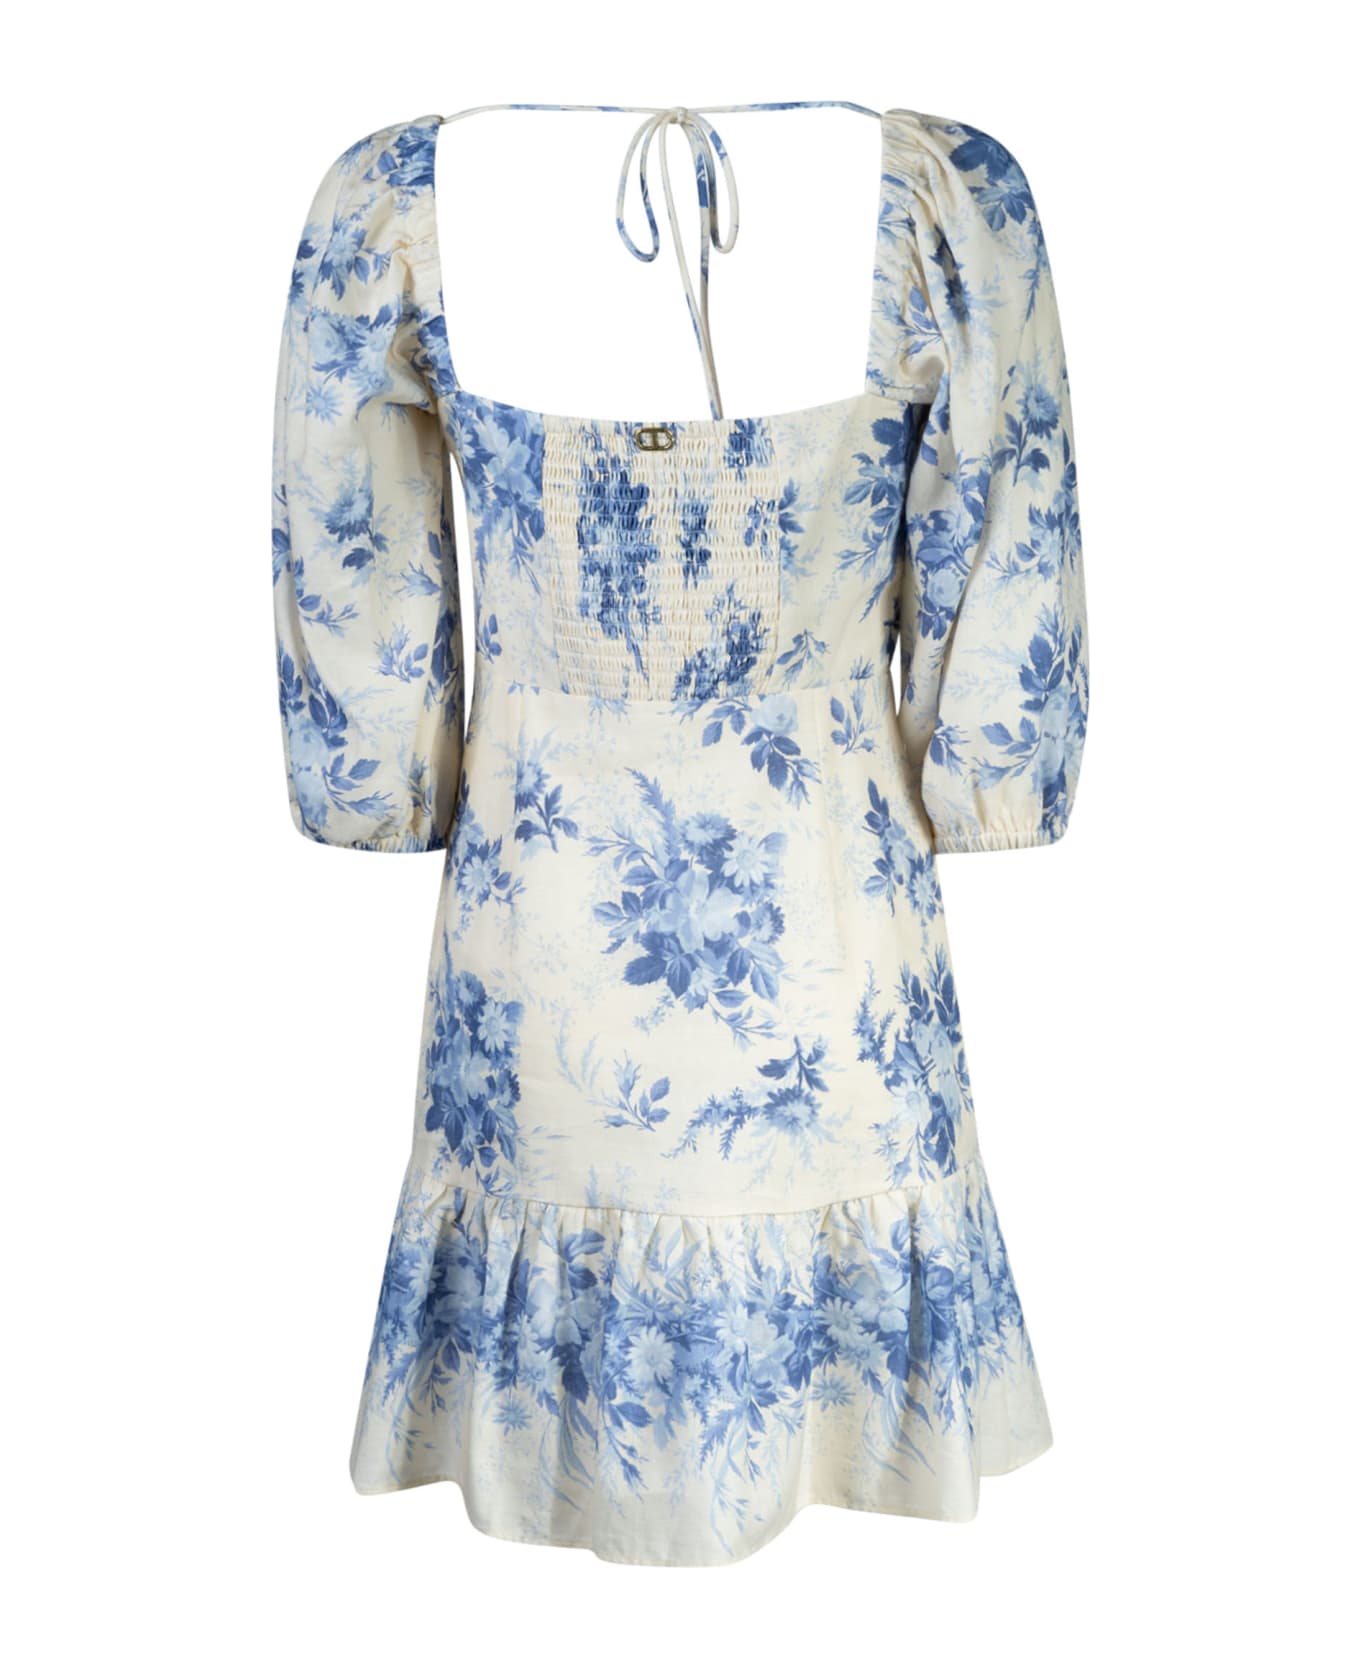 TwinSet Floral Print Dress - Ivory/Blue